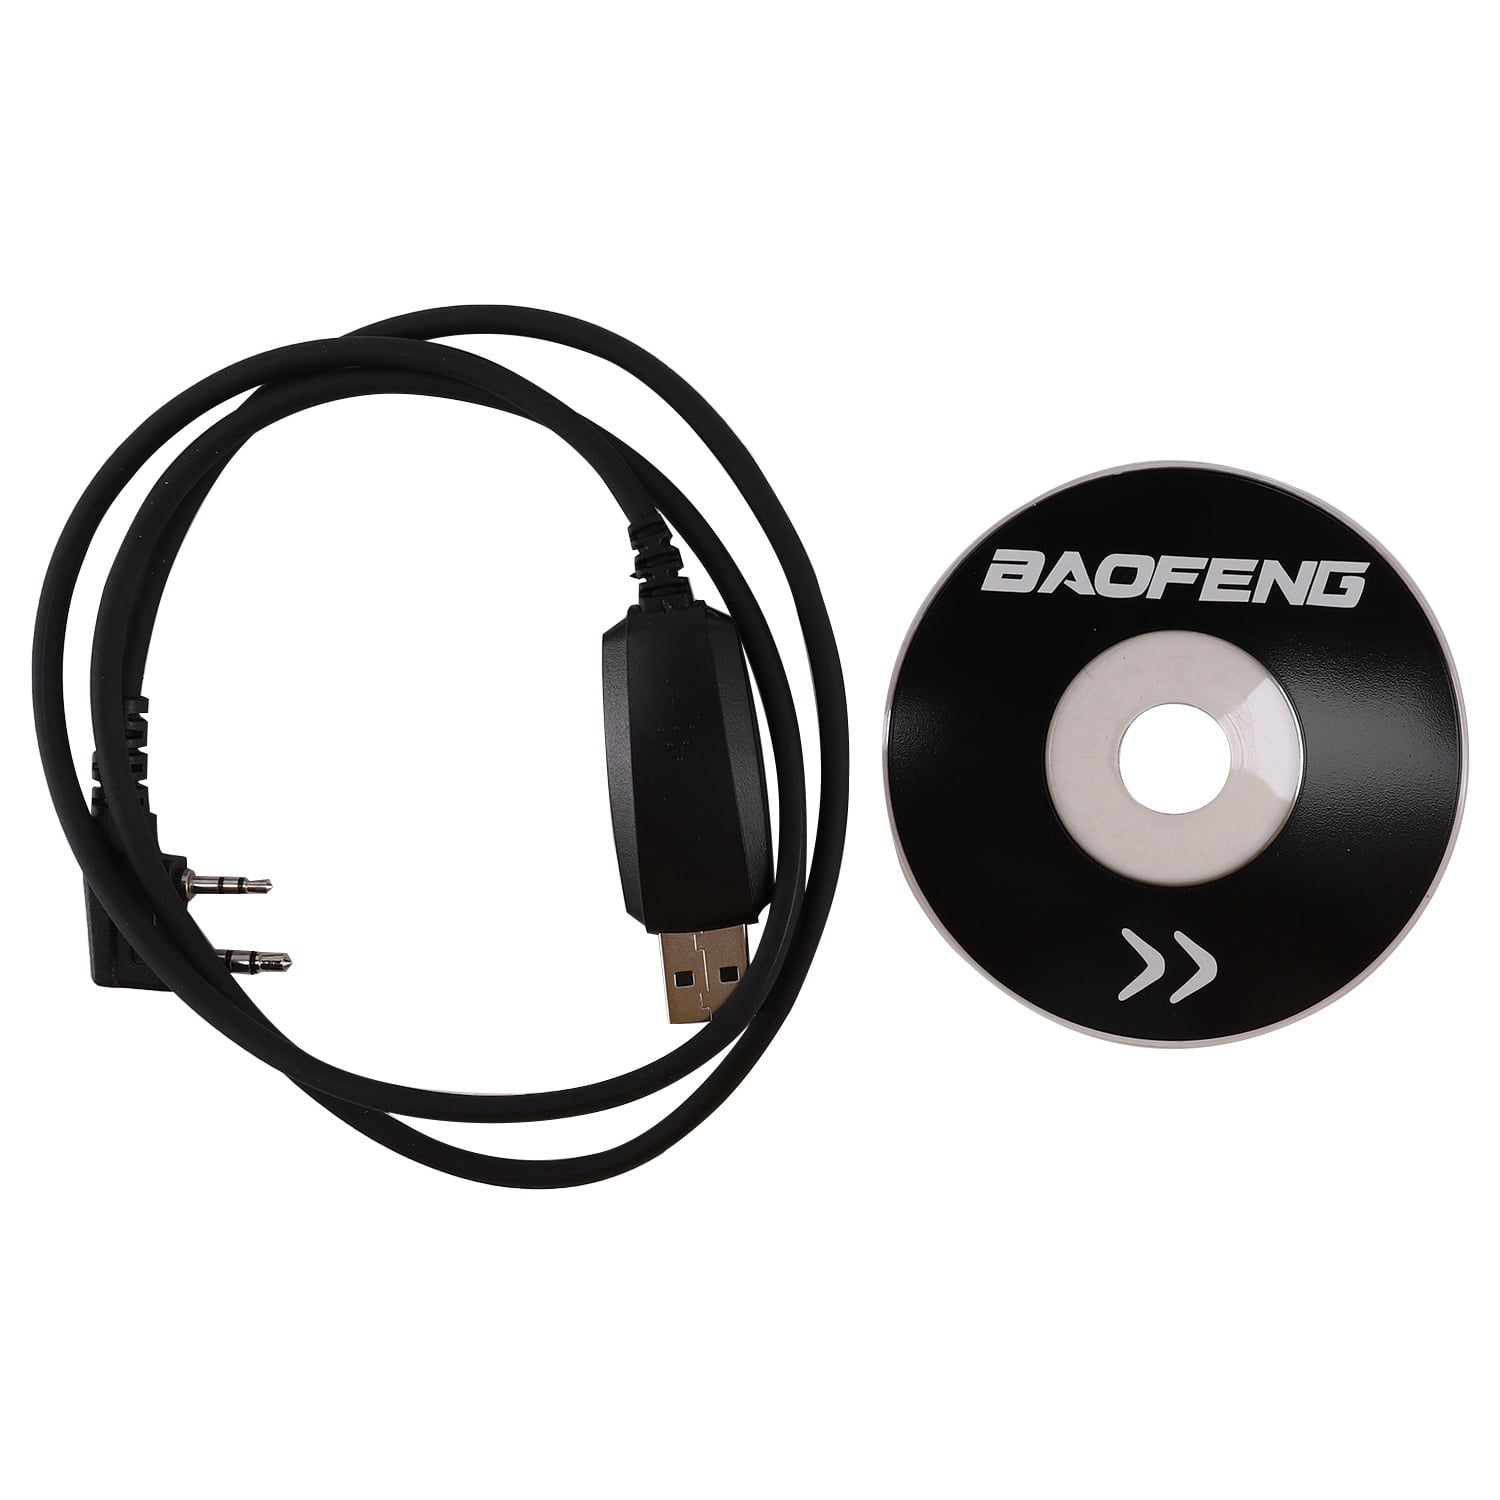 BAOFENG PROGRAMMATORE USB Cavo & CD PER Baofeng/Pofung uv-5r uv-82 gt-3 88 k8w5 